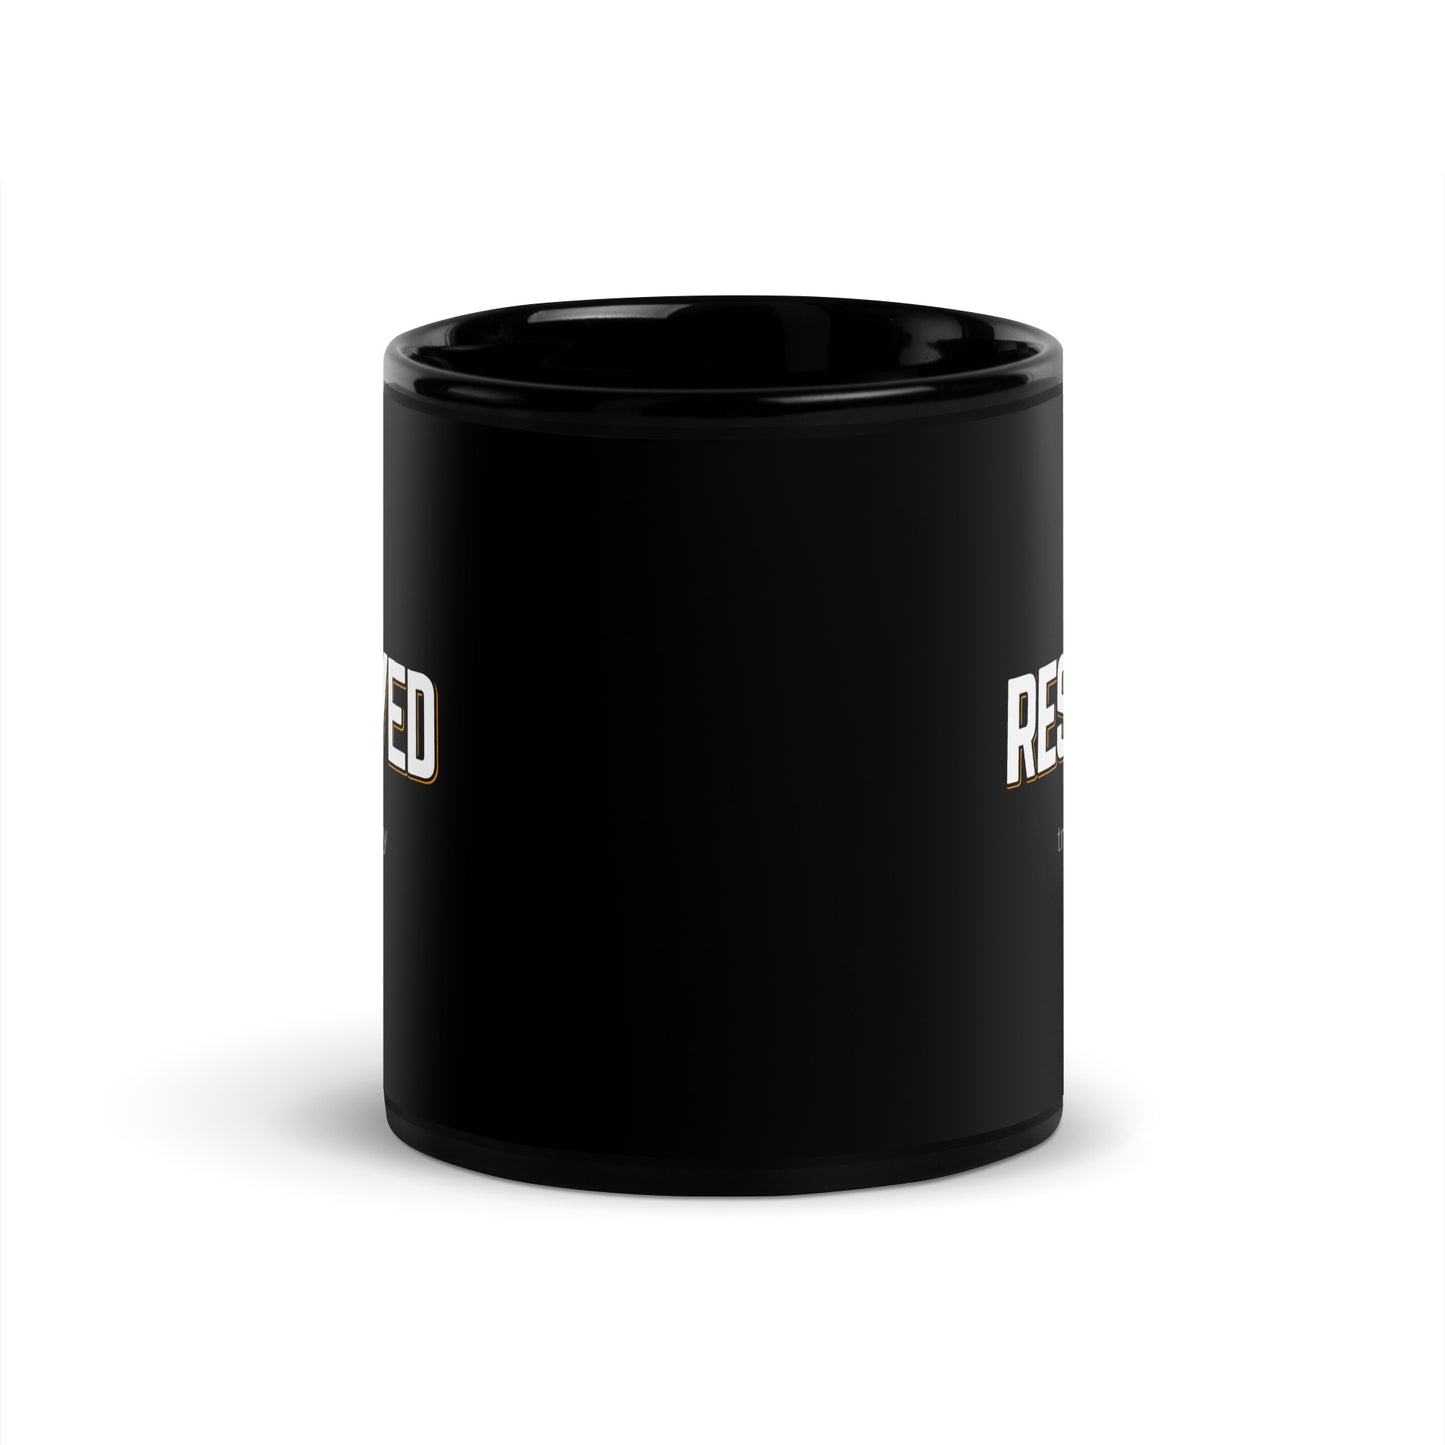 RESERVED Black Coffee Mug Bold 11 oz or 15 oz